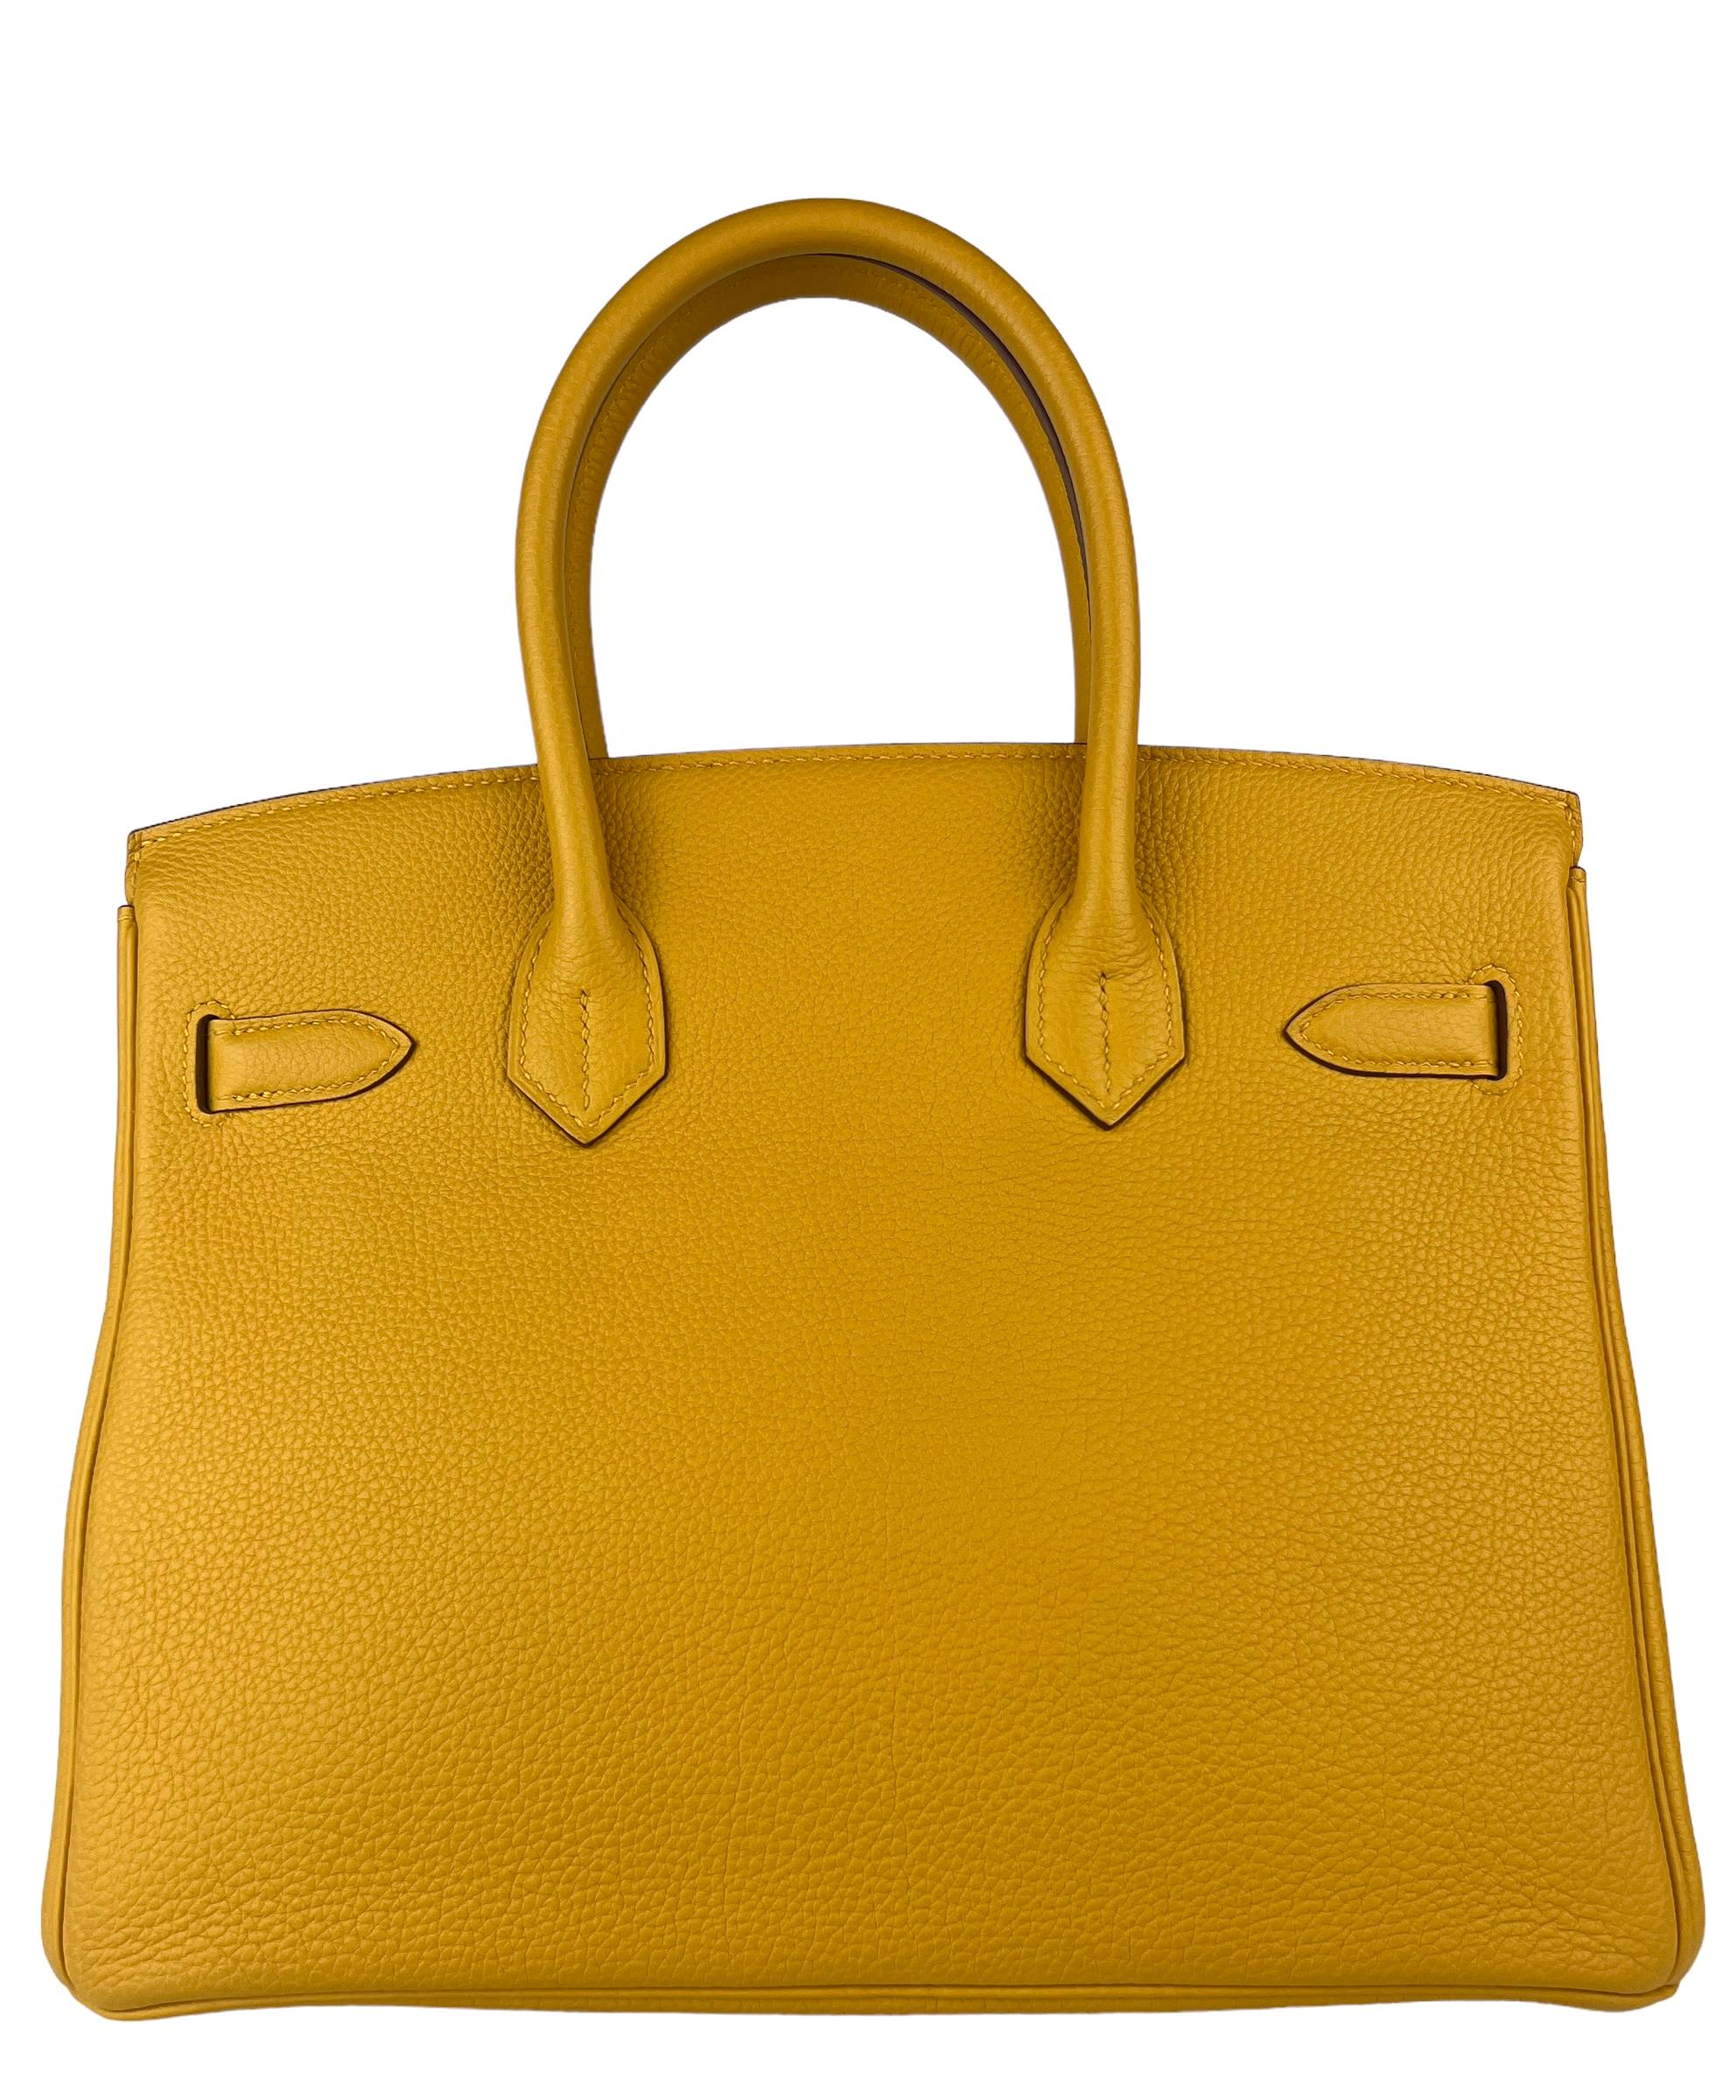 Hermes Birkin 30 Jaune Ambre Yellow Leather Gold Hardware Handbag Bag Excellent état à Miami, FL